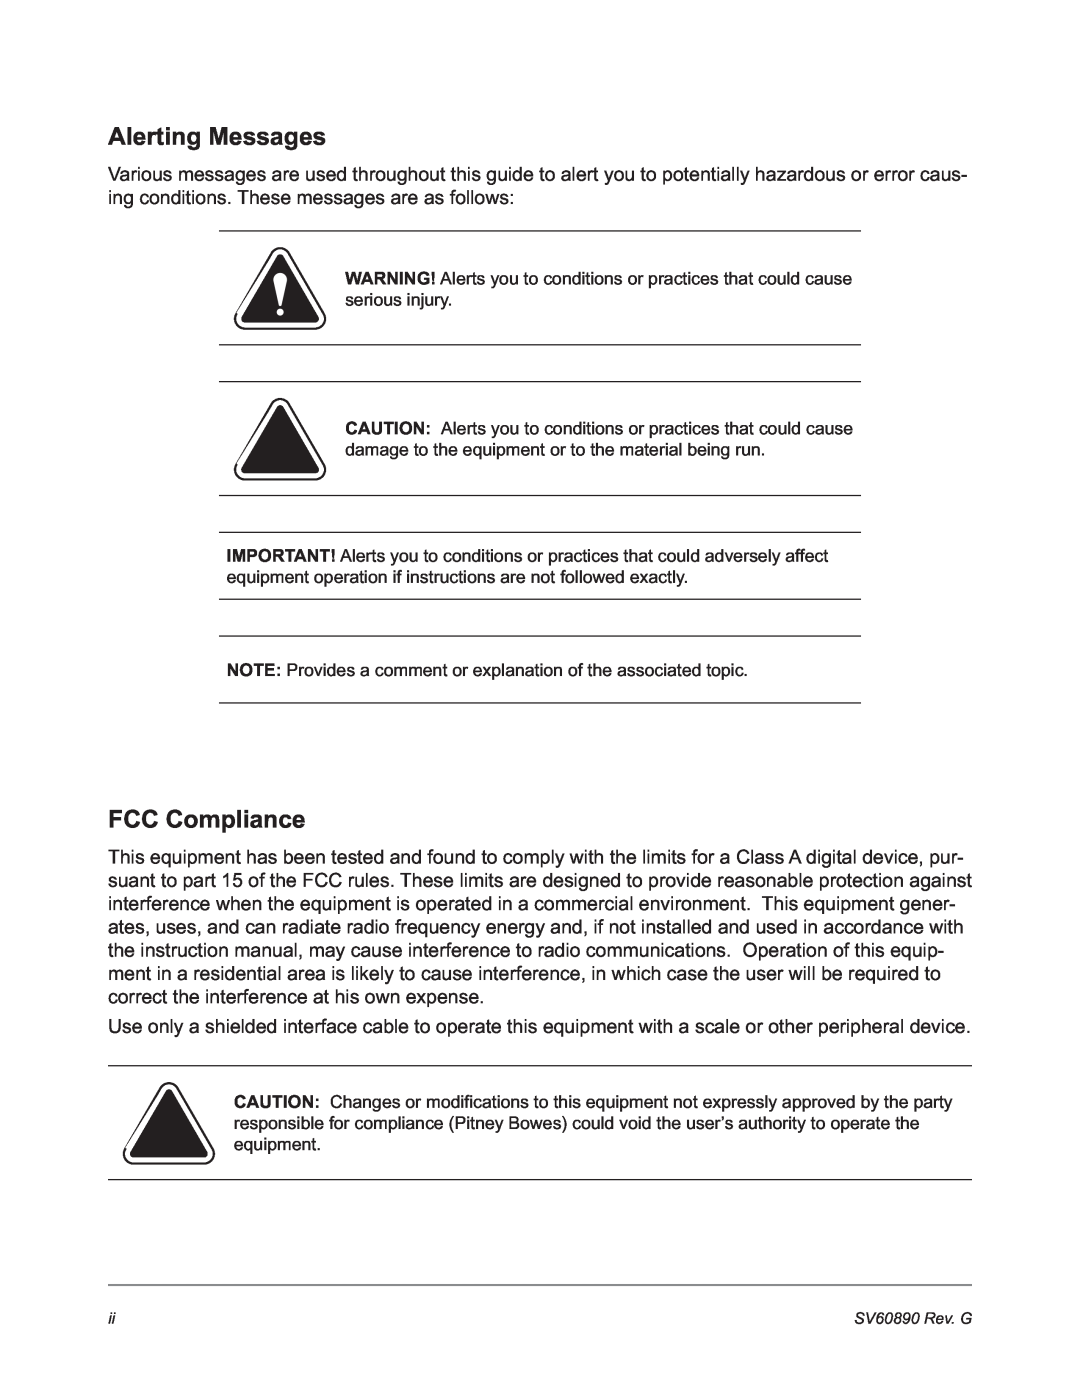 Pitney Bowes DM550, DM500 manual Alerting Messages, FCC Compliance 